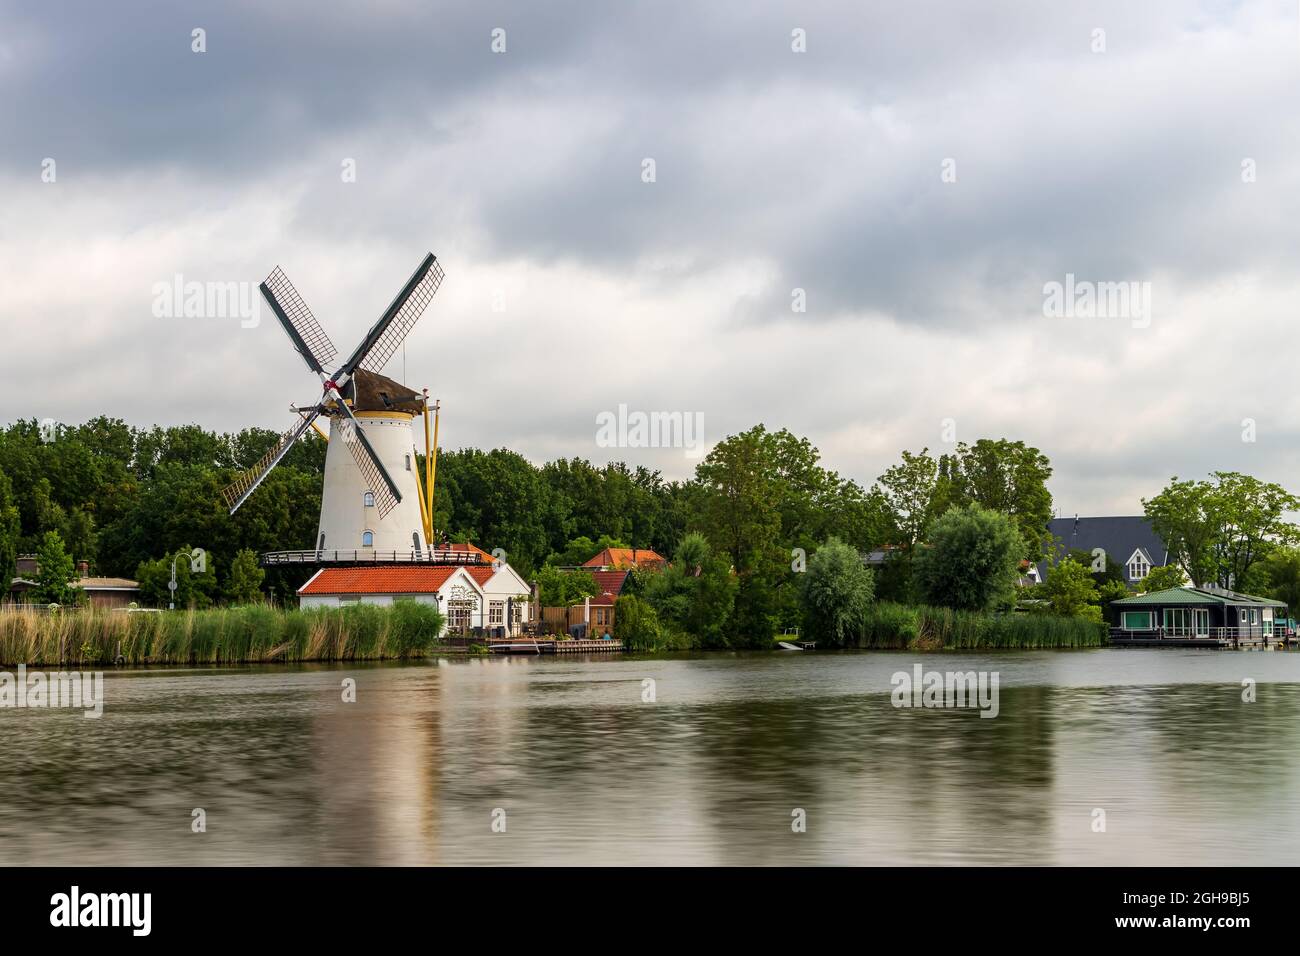 Windmill de vier winden, Rotterdam, pays-Bas Banque D'Images